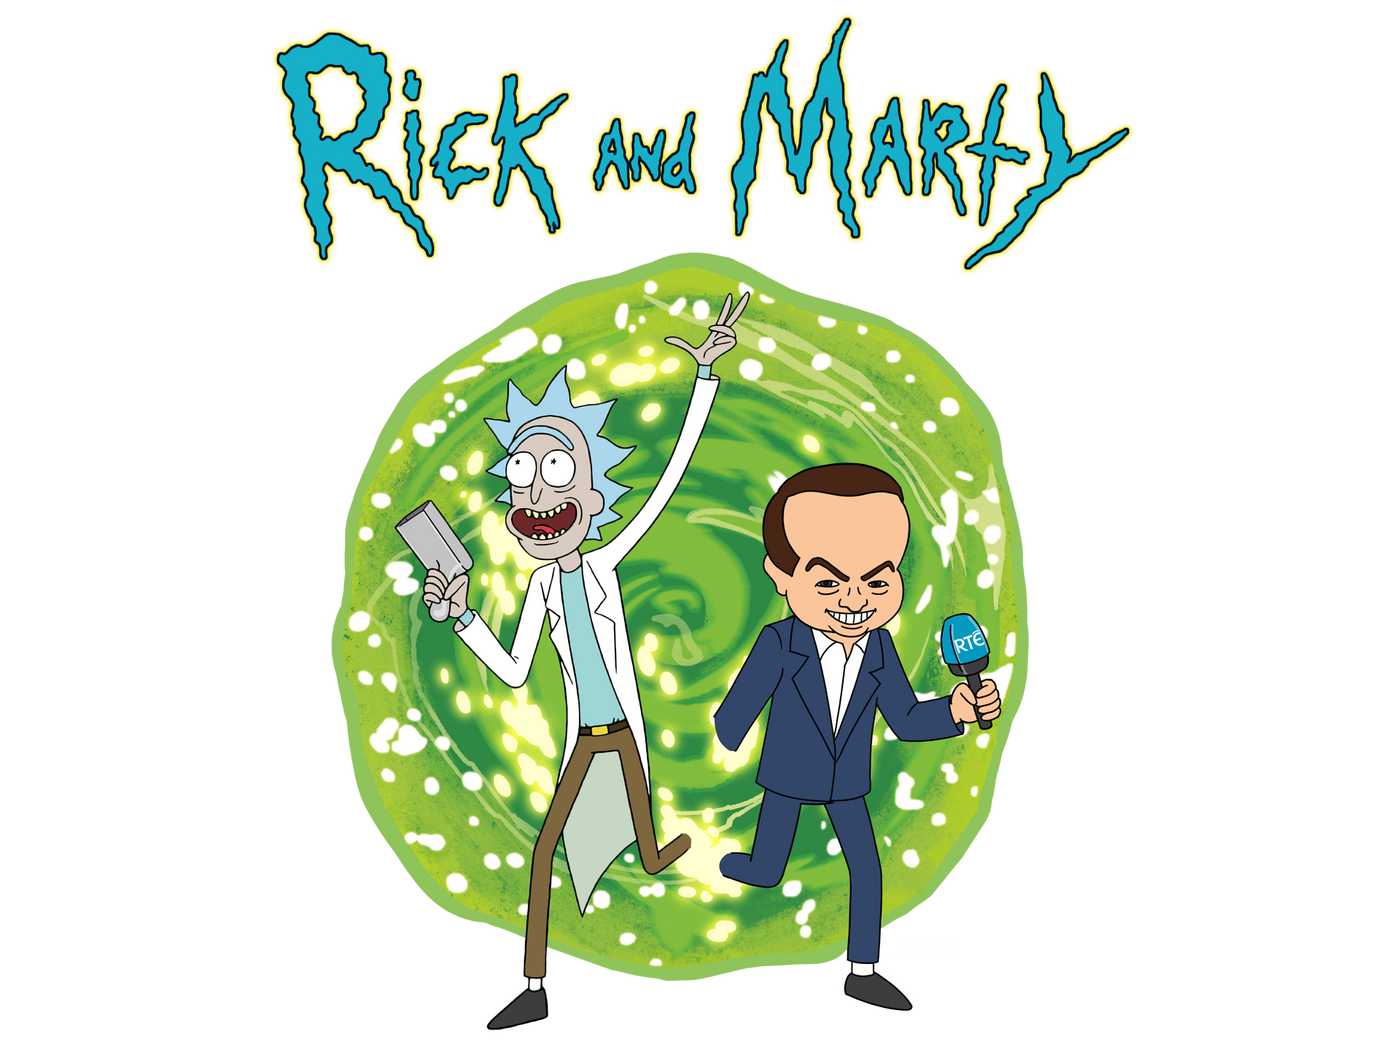 Rick & Marty - Premium WWN T-shirt